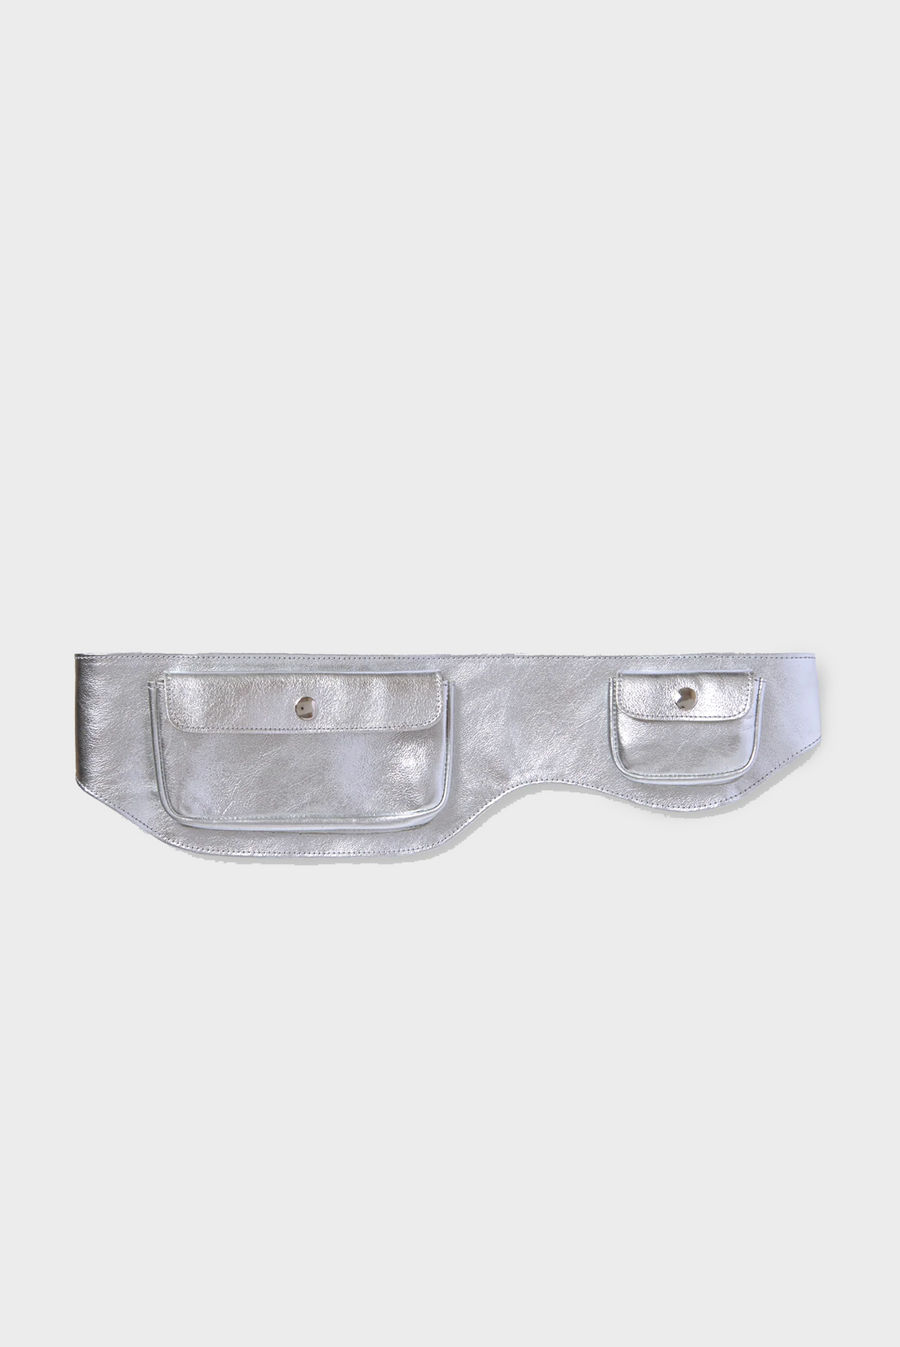 Gimaguas - Rino Belt - Silver